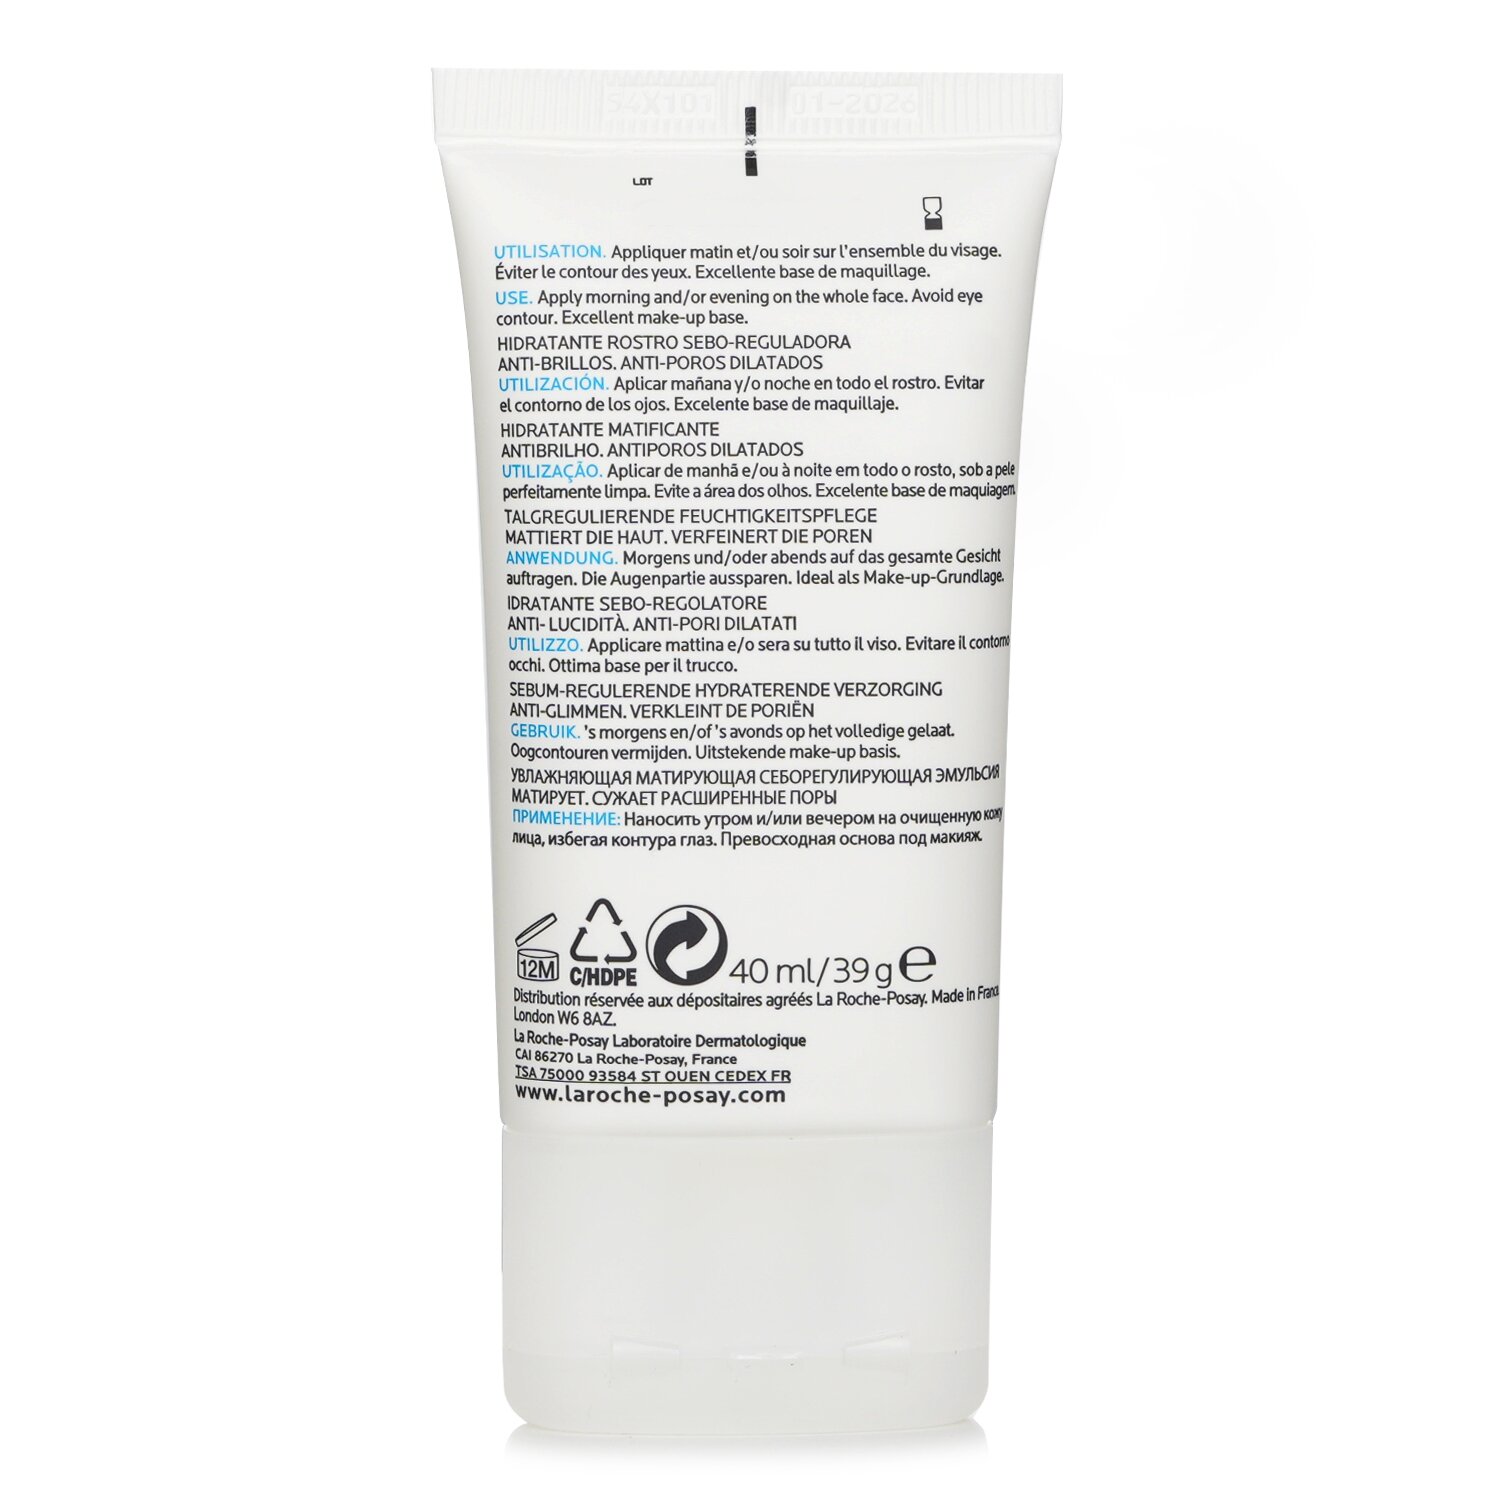 La Roche Posay Effaclar Mat Daily Moisturizer (New Formula, For Oily Skin) 40ml/1.35oz